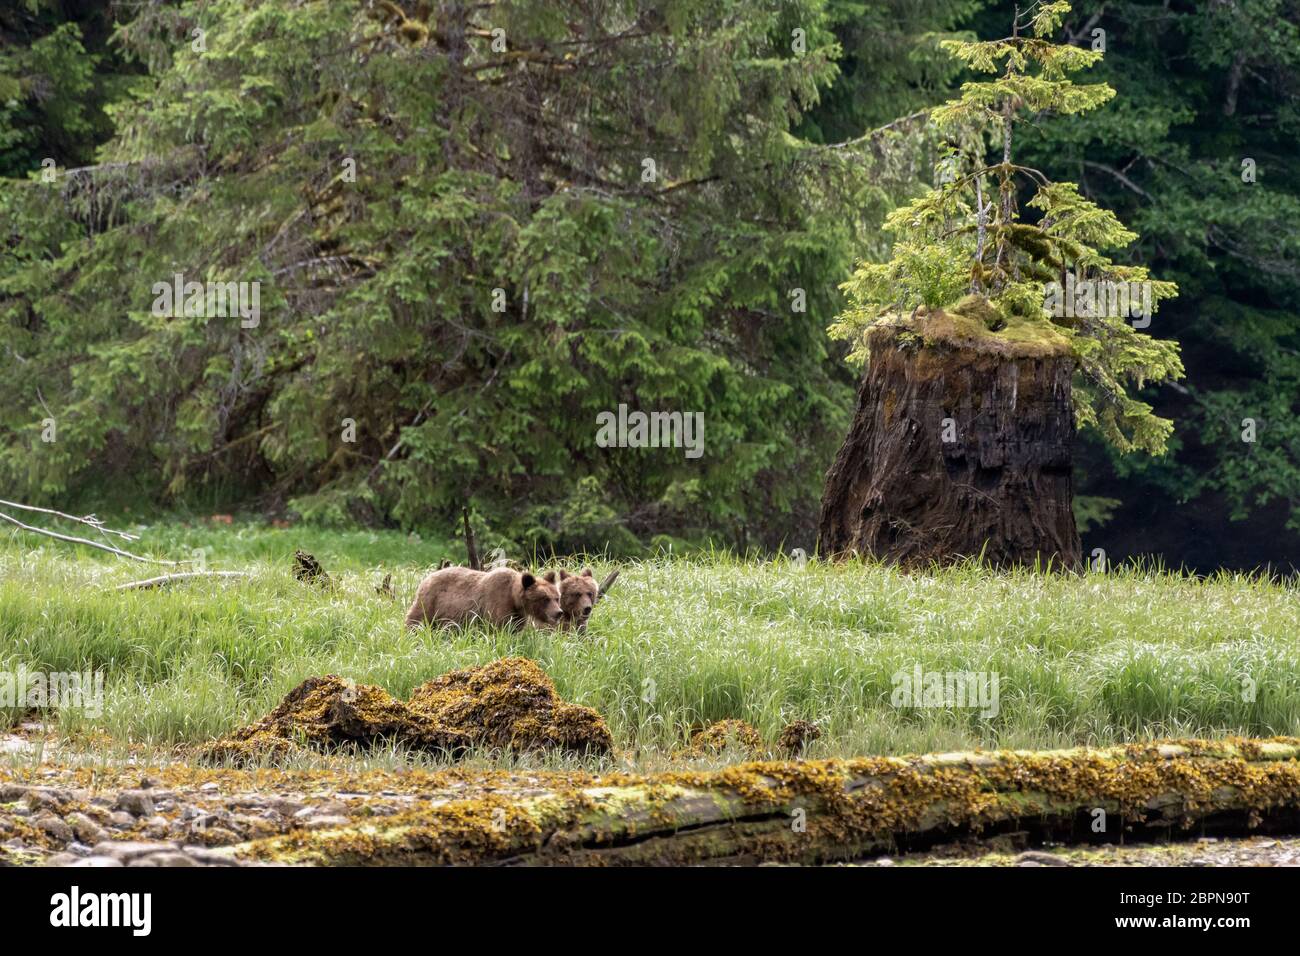 Junge grizzly Geschwister in einer Segge Gras-Wiese bei Ebbe, Khutzeymateen Grizzly Bear Sanctuary, British Columbia Stockfoto